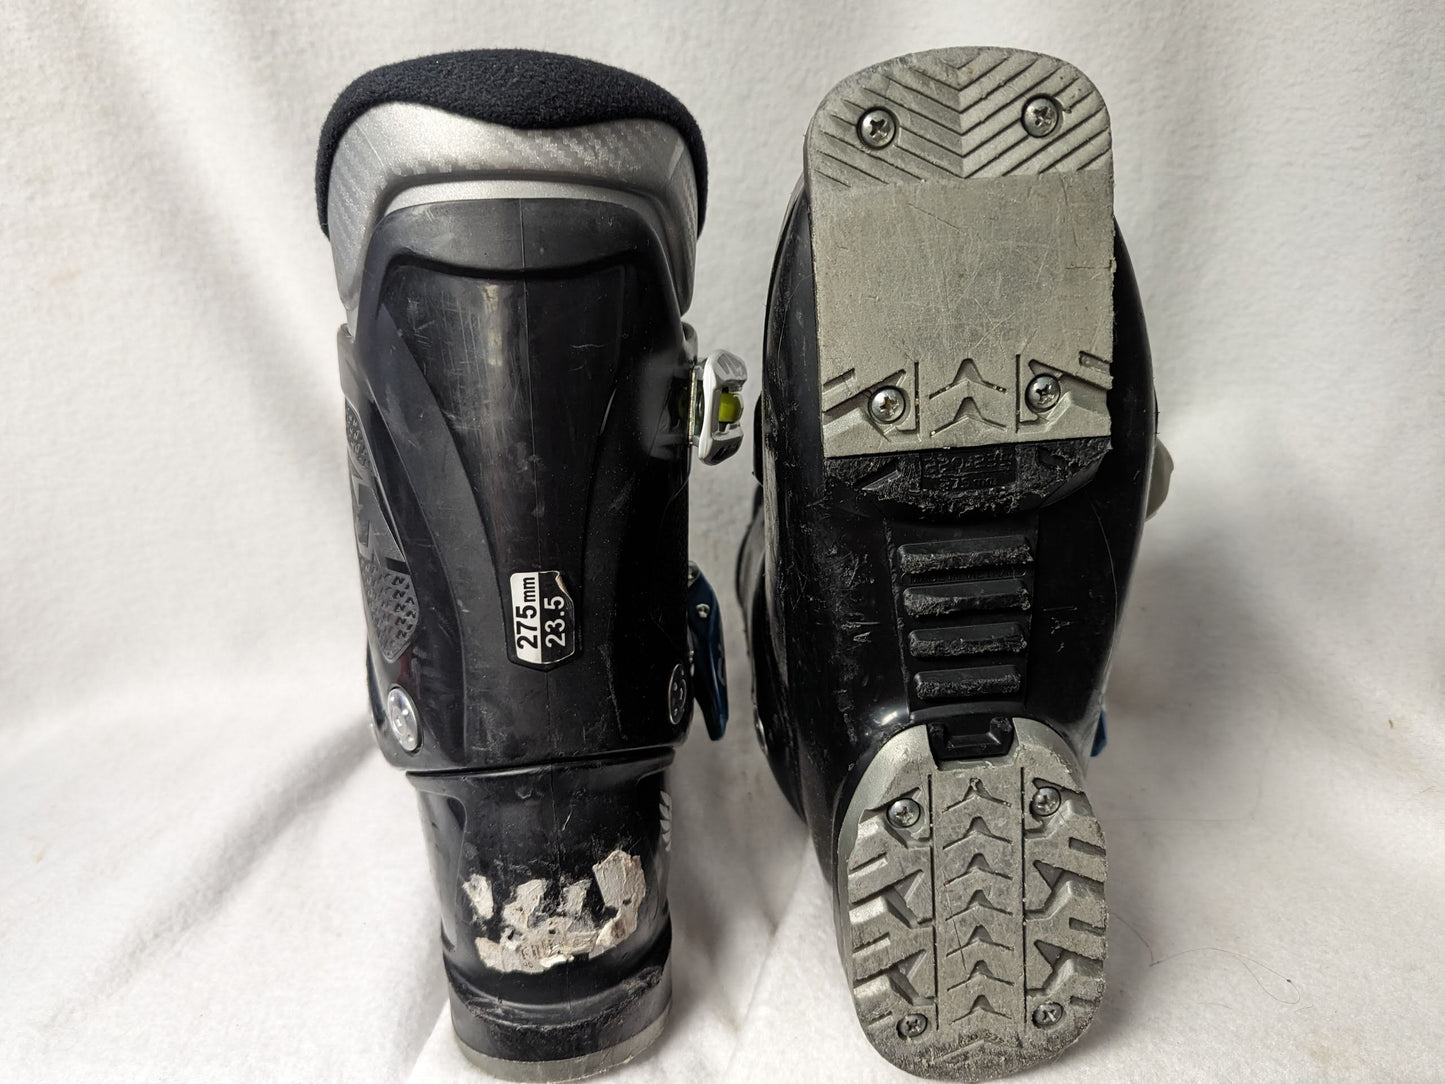 Nordica Firearrow Team 3 Ski Boots Size 23.5 Color Black Condition Used